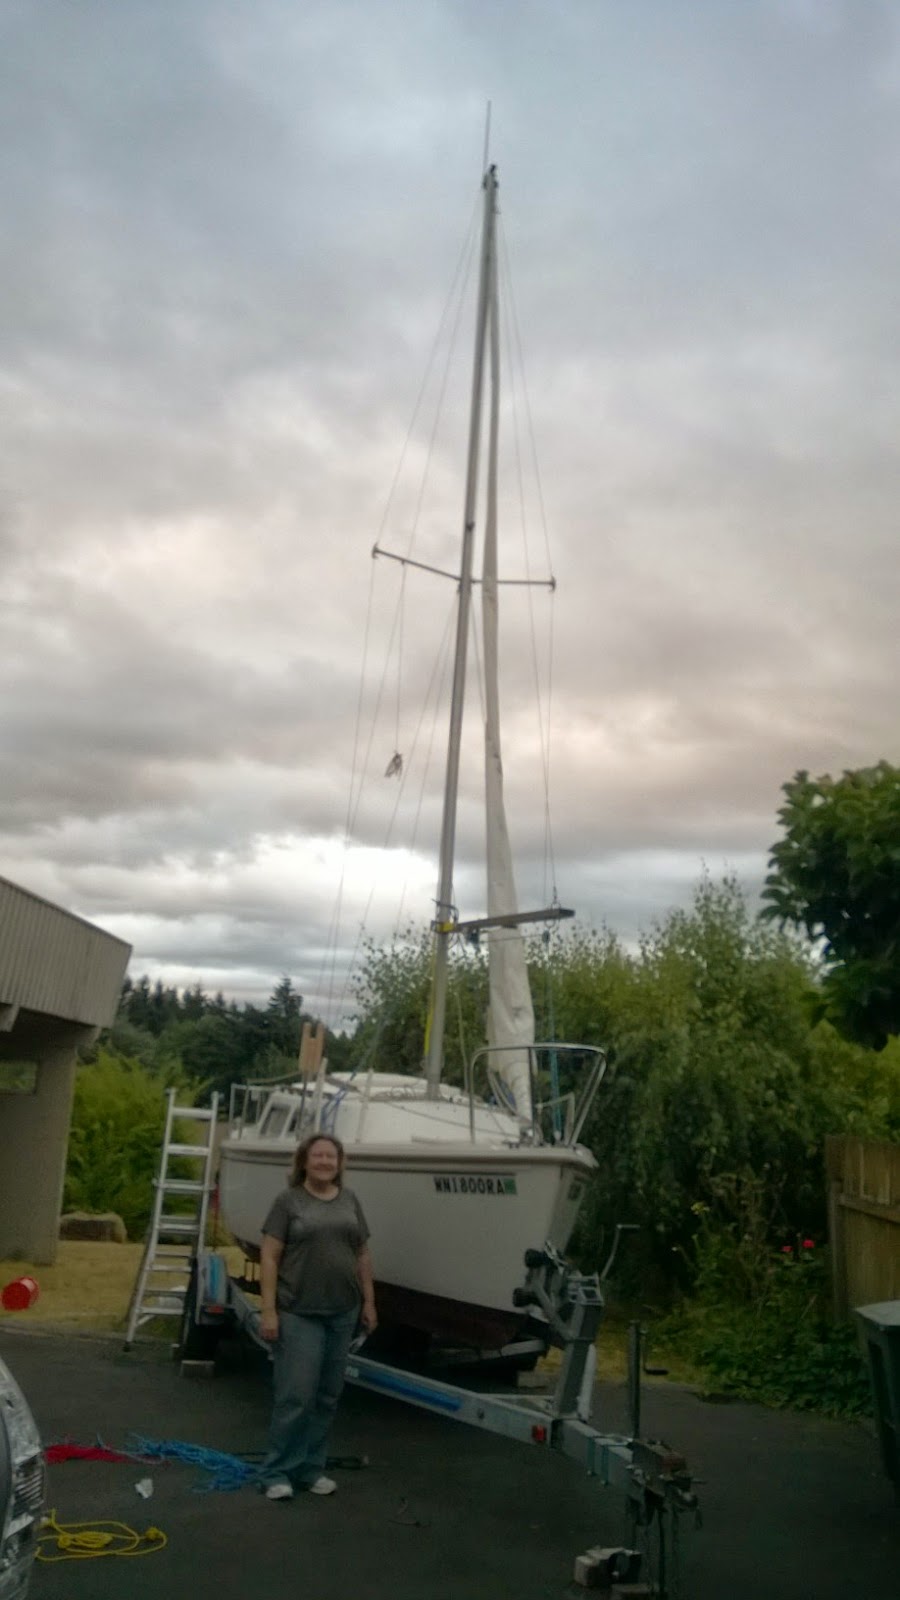 Catalina 22 with the mast raised